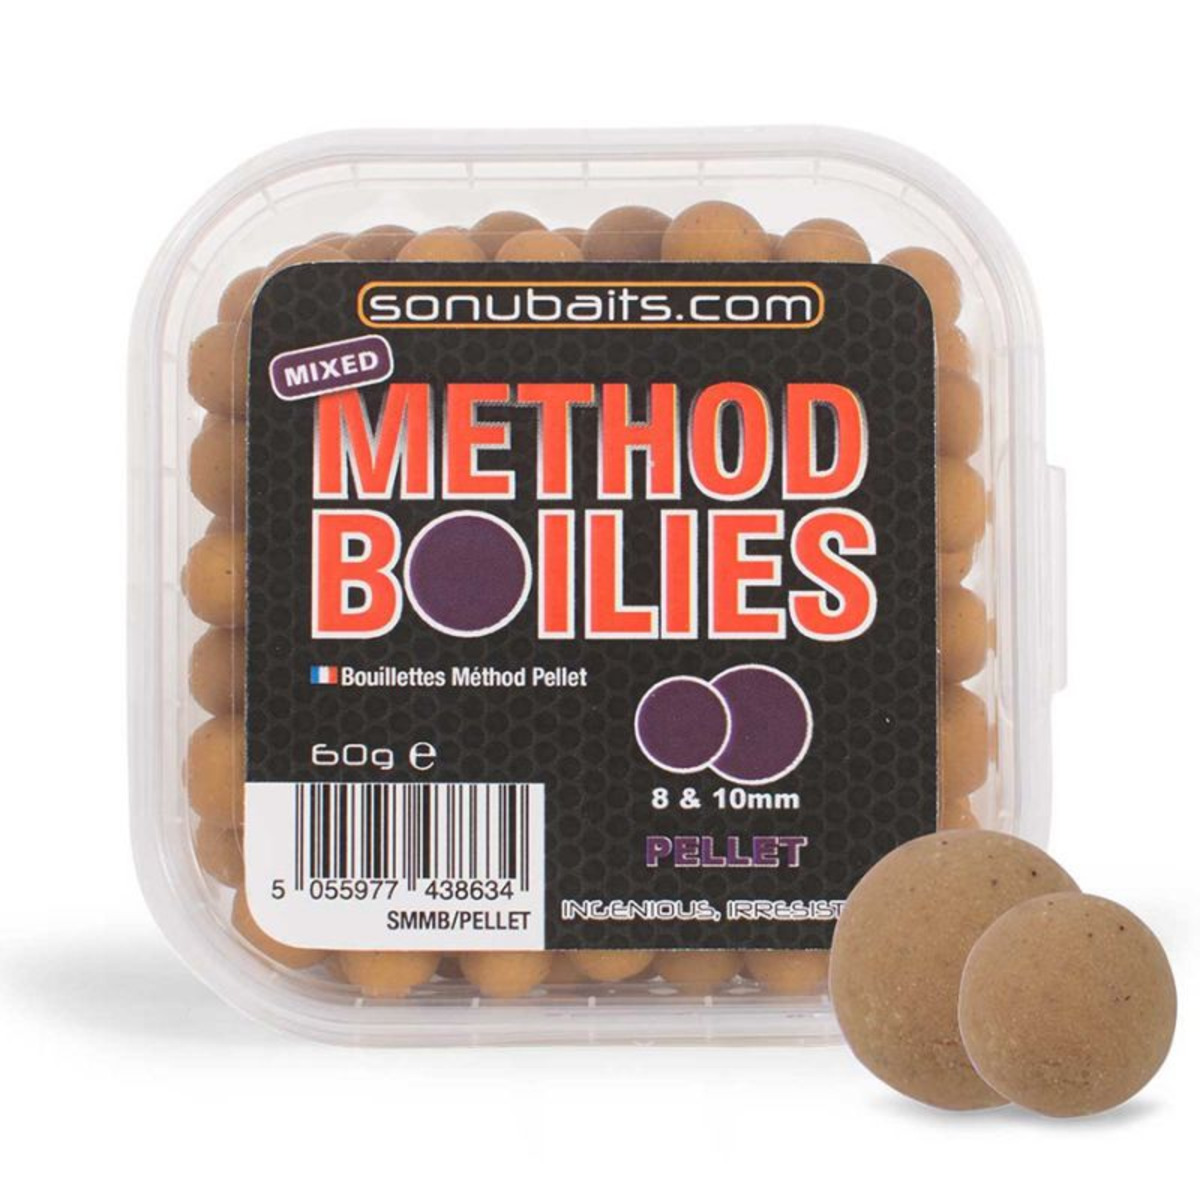 Sonubaits Mixed Method Boilies - 8-10 mm - 60 g - Pellet